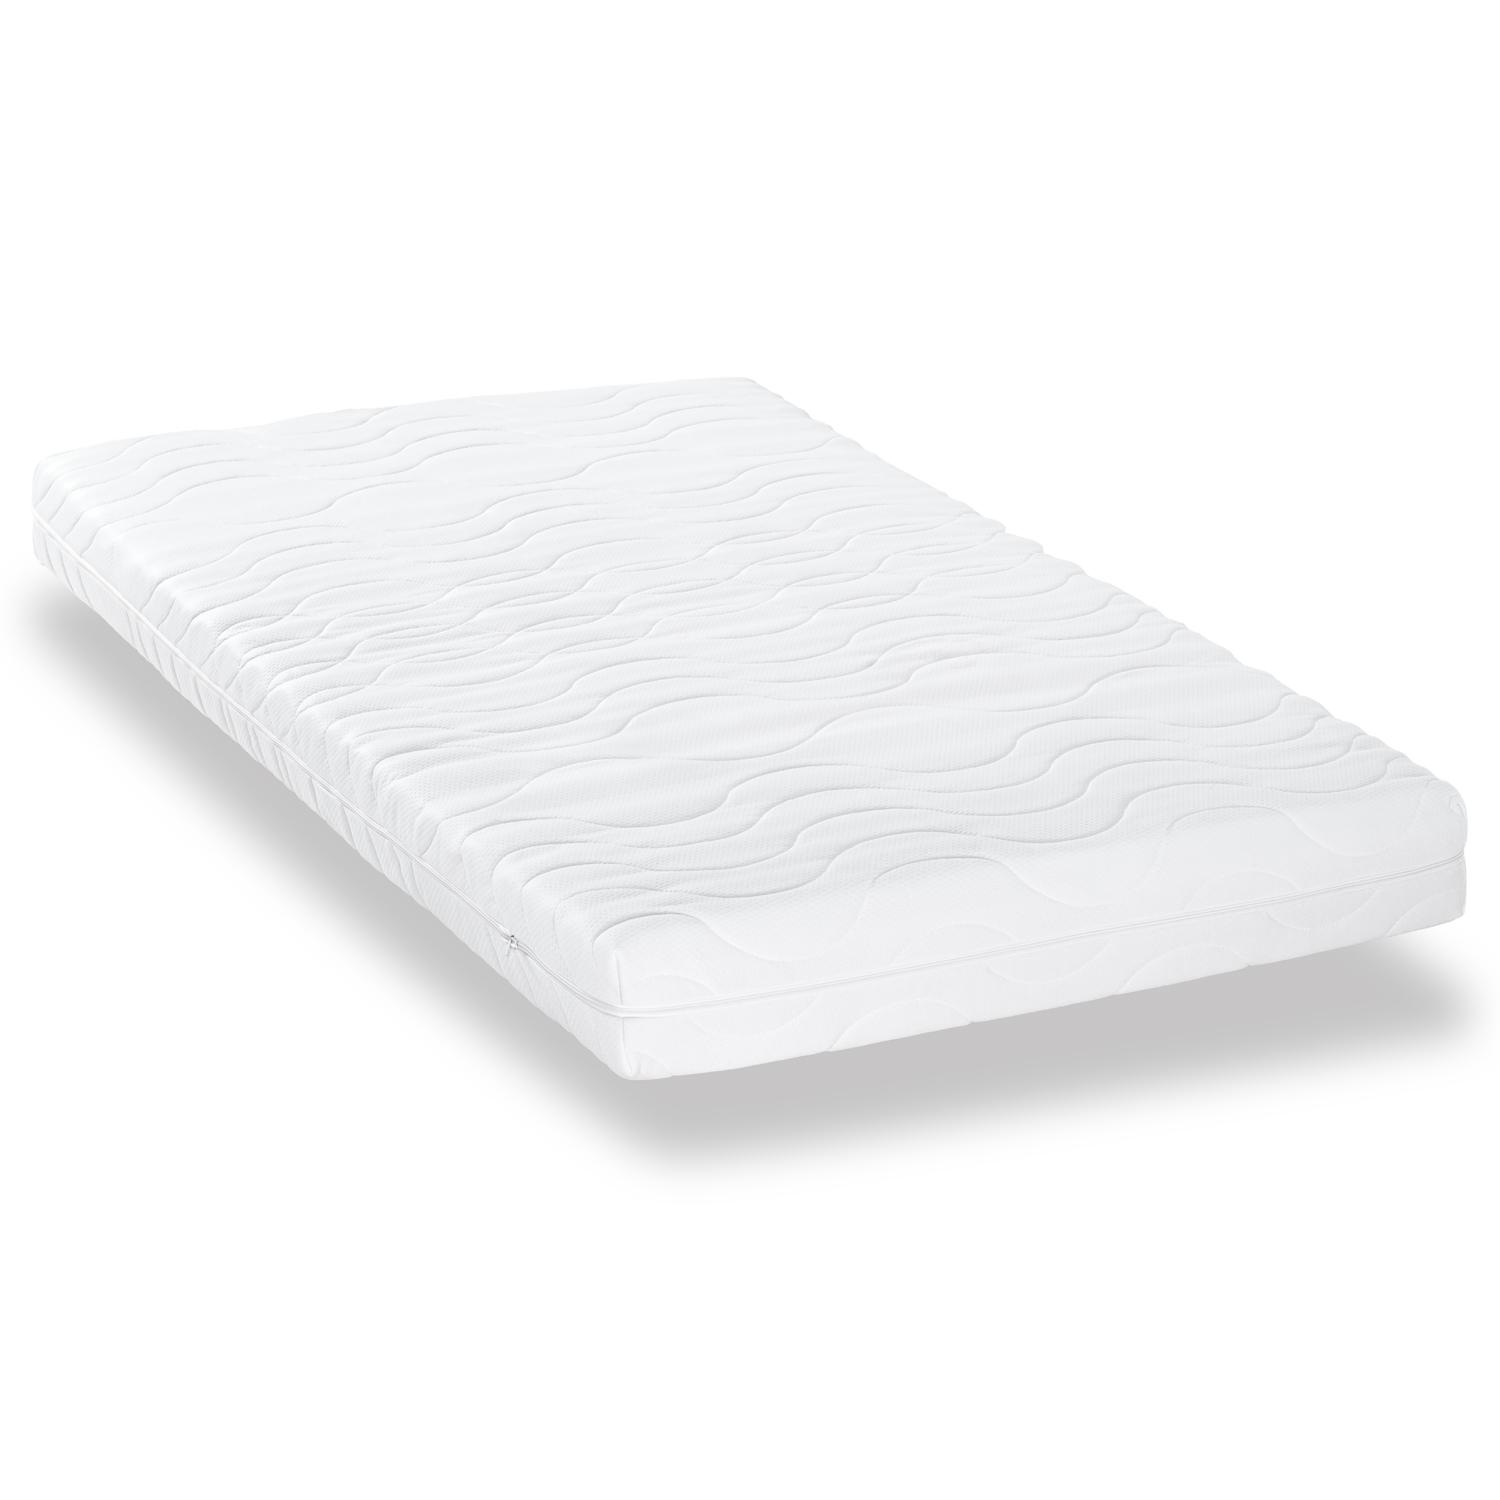 Premium 7-zone mattress 140x200 cm CloudComfort, height 15 cm, firmness level H2/H3